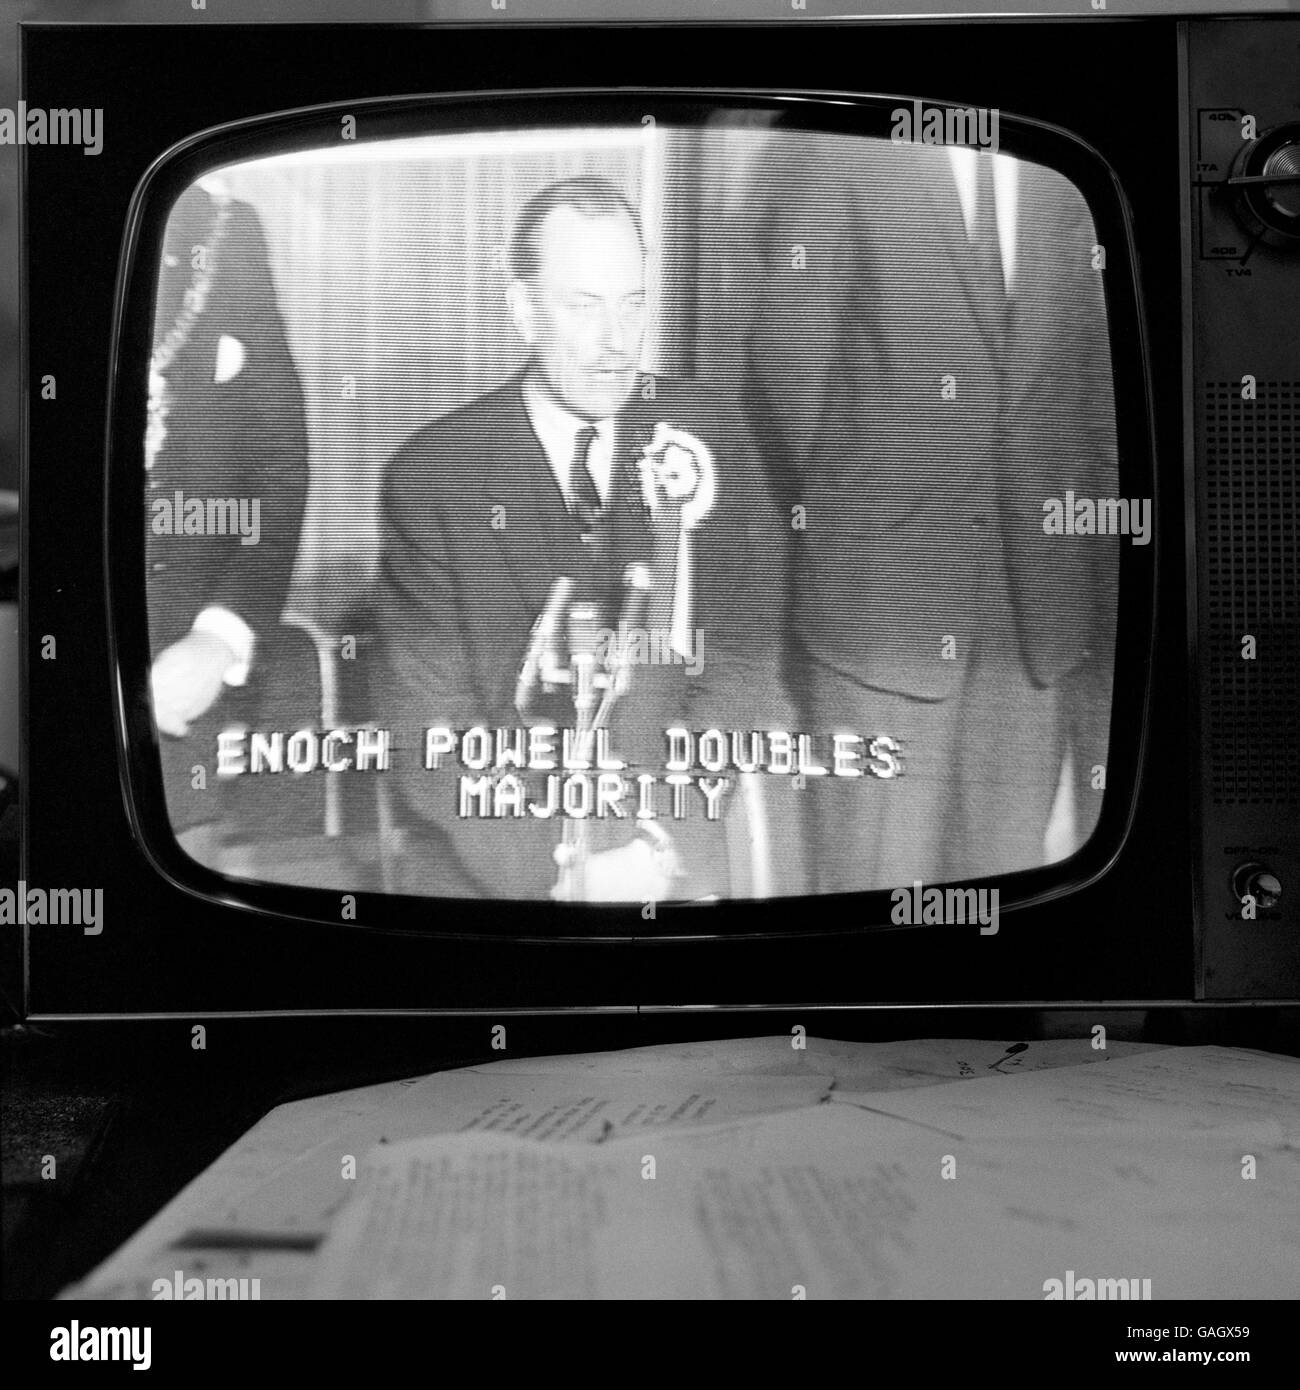 Politics - Enoch Powell Doubled his Majority Stock Photo